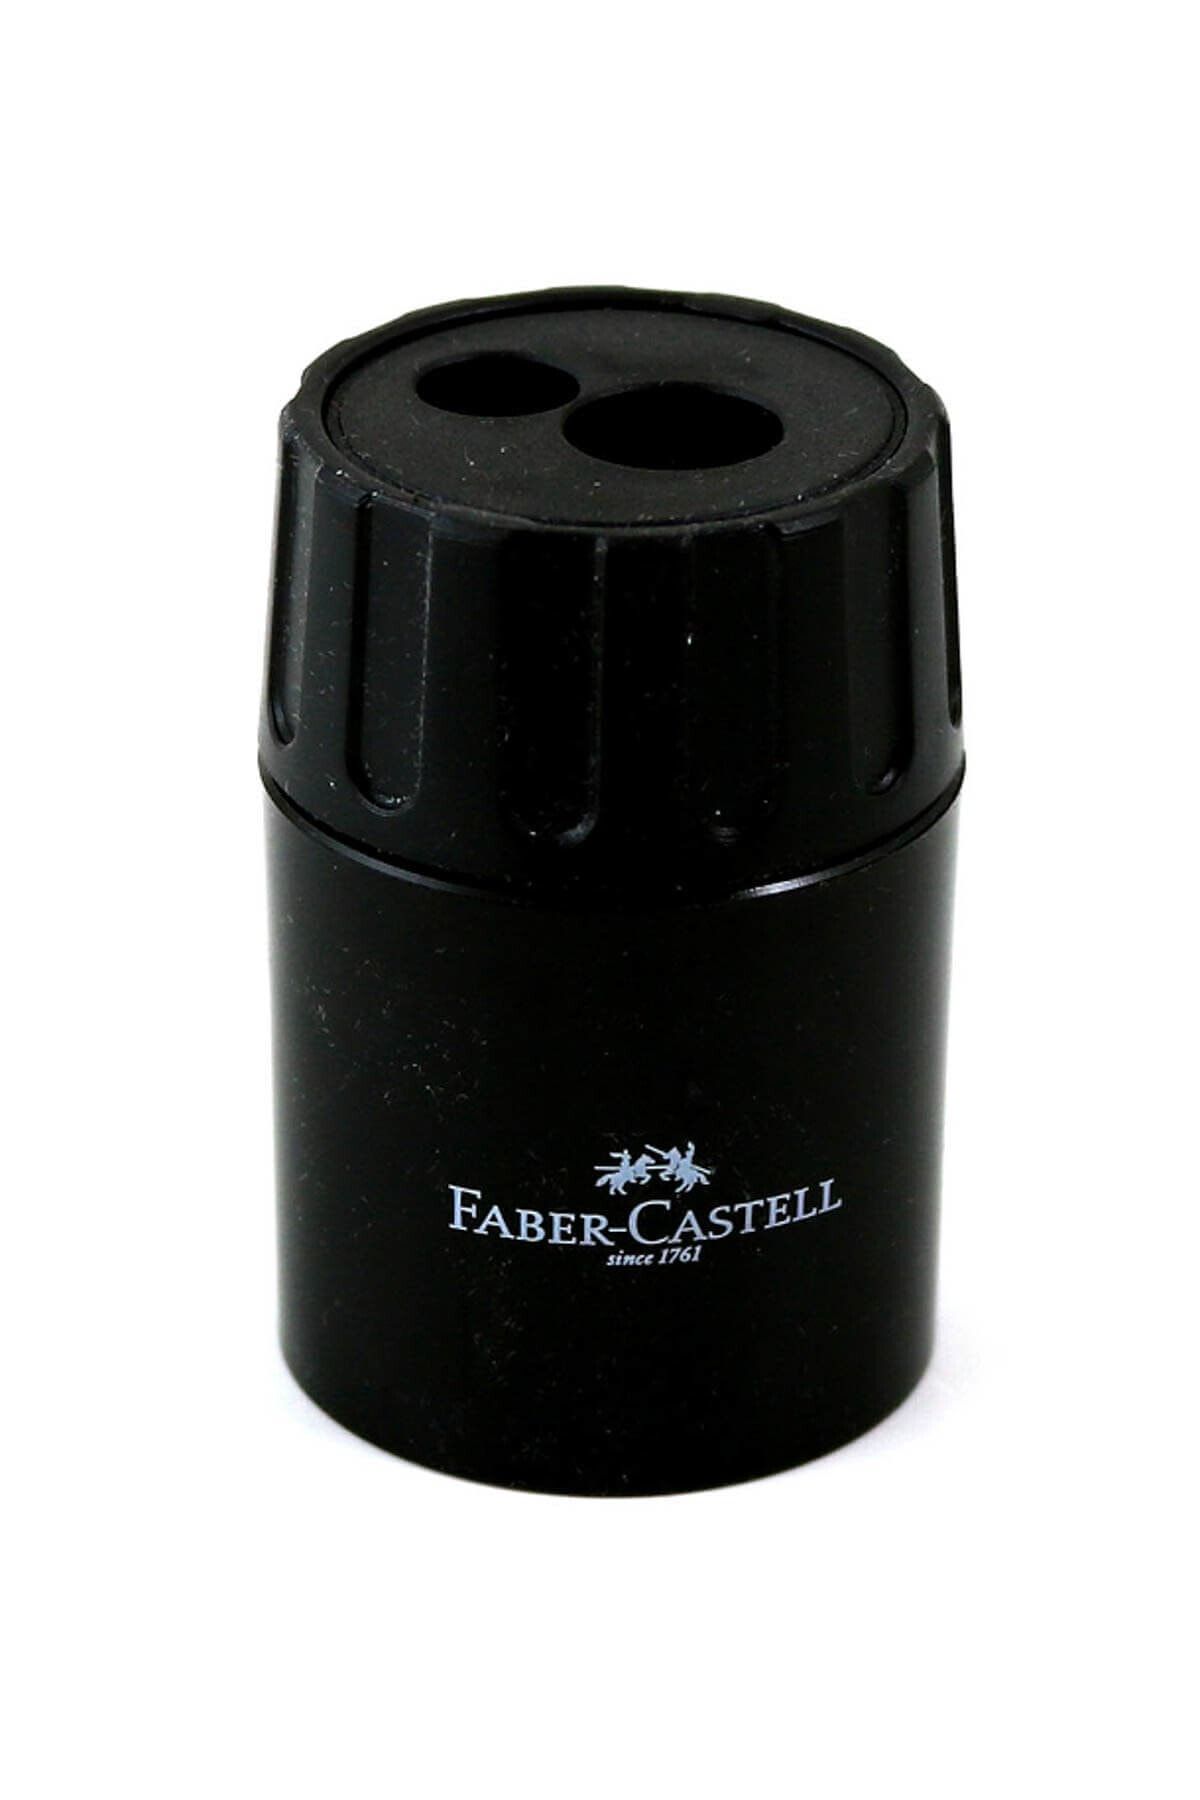 Faber Castell Geniş Hazneli Çiftli Kalemtraş Adet Siyah